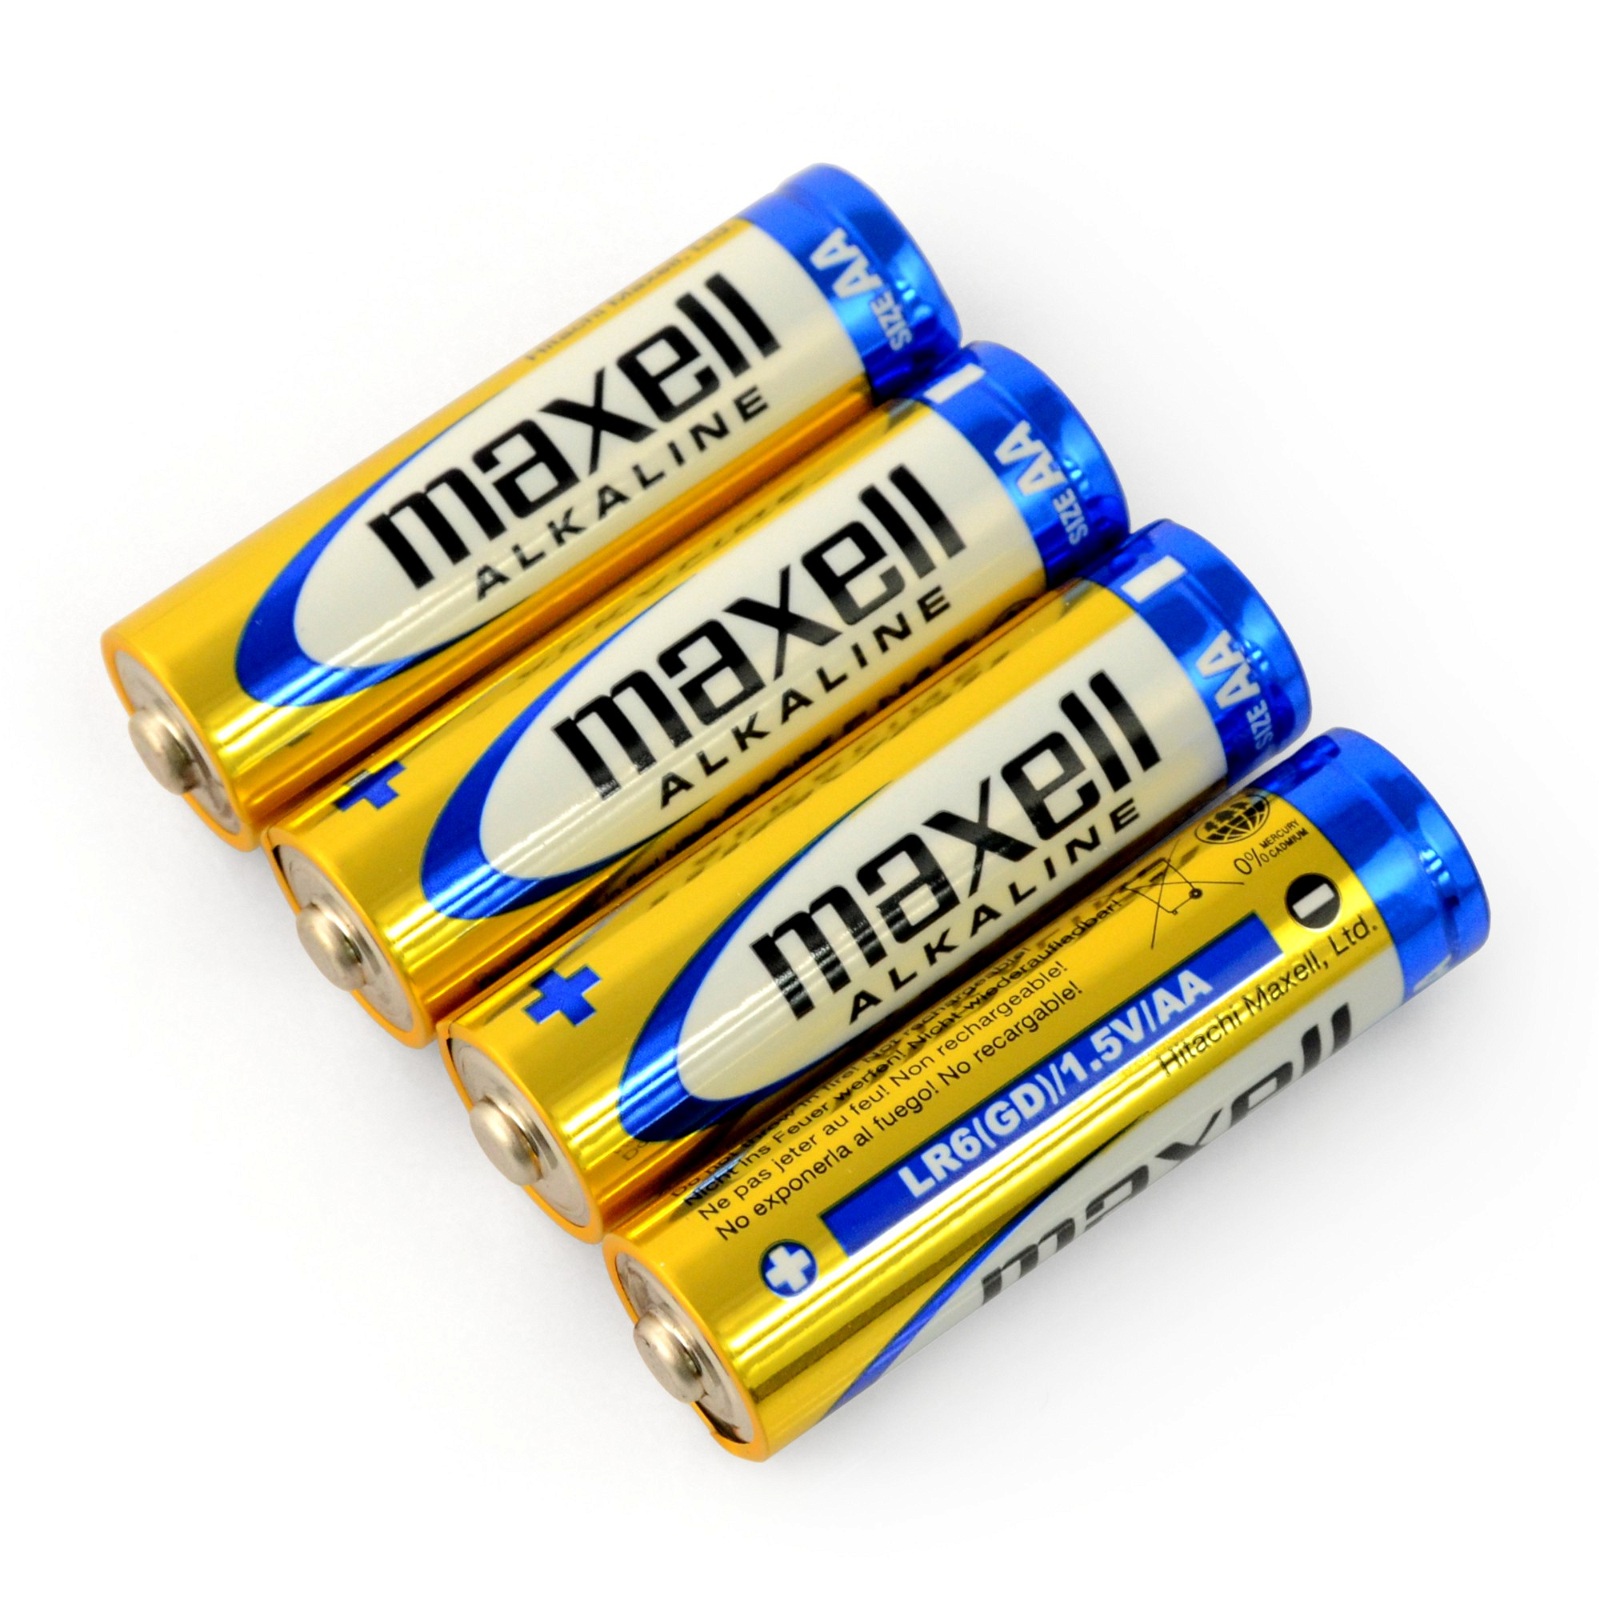 Bateria AA (R6) Maxell Alkaline